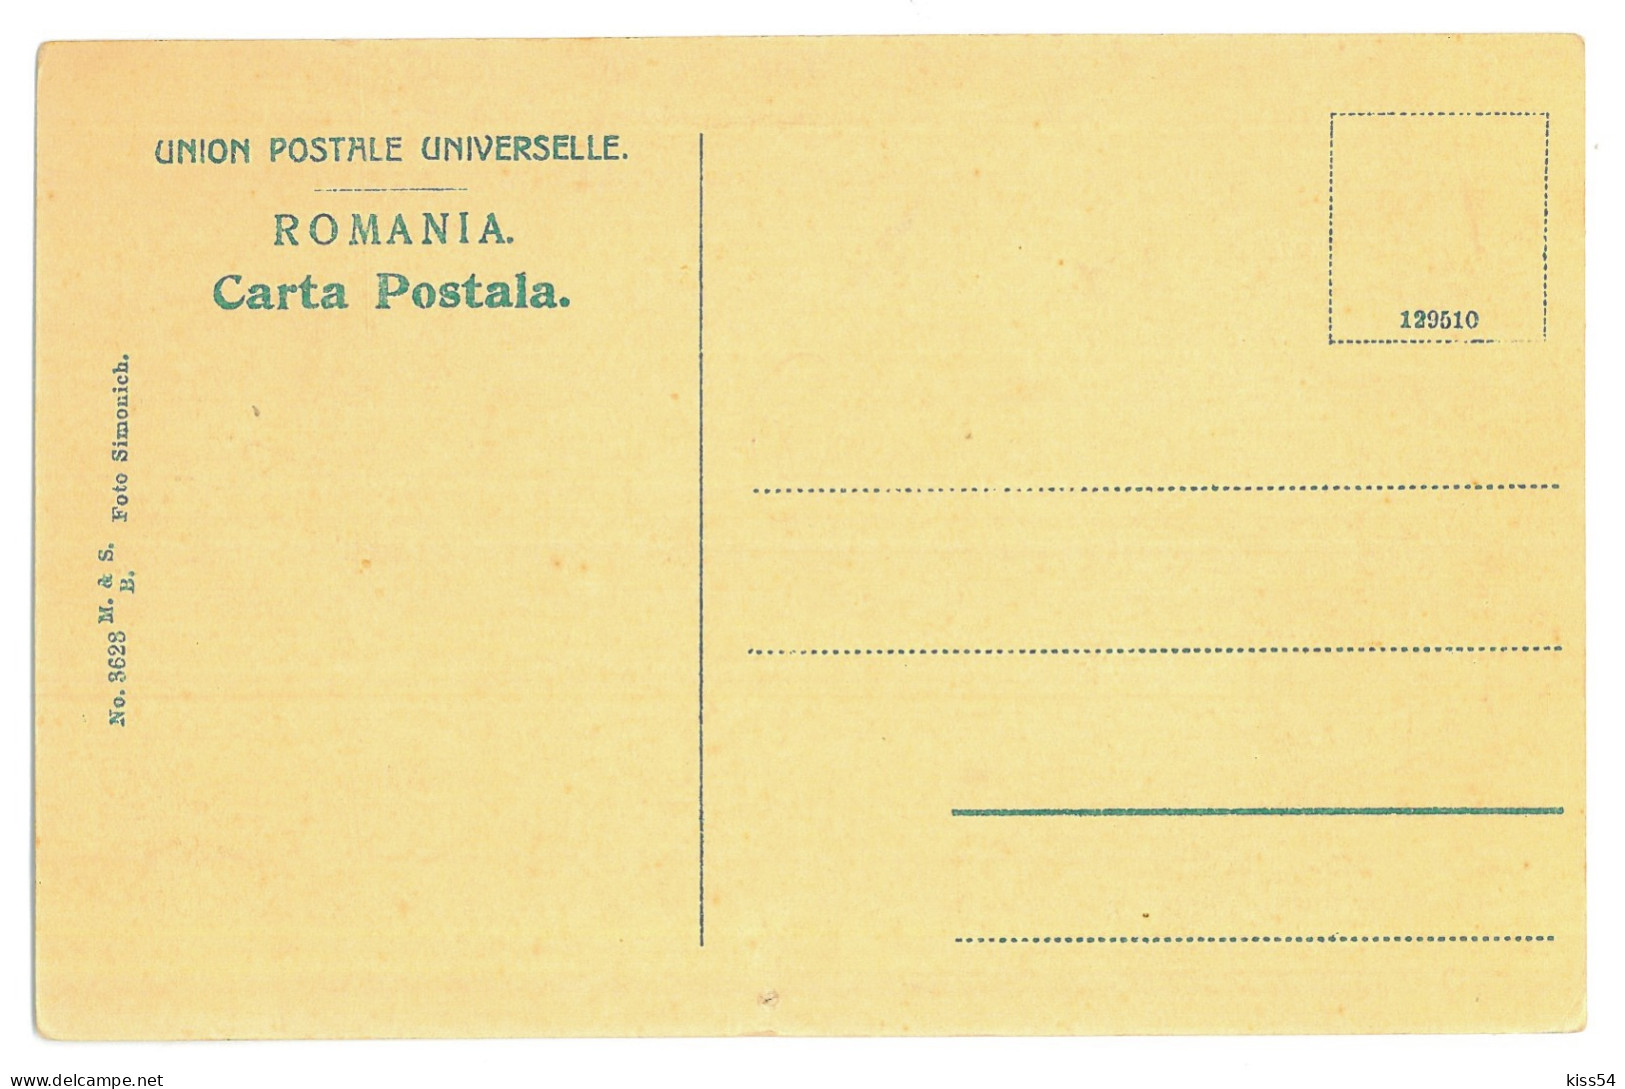 RO 77 - 24311 PASCANI, Iasi, Railway Station View, Romania - Old Postcard - Unused - Rumania